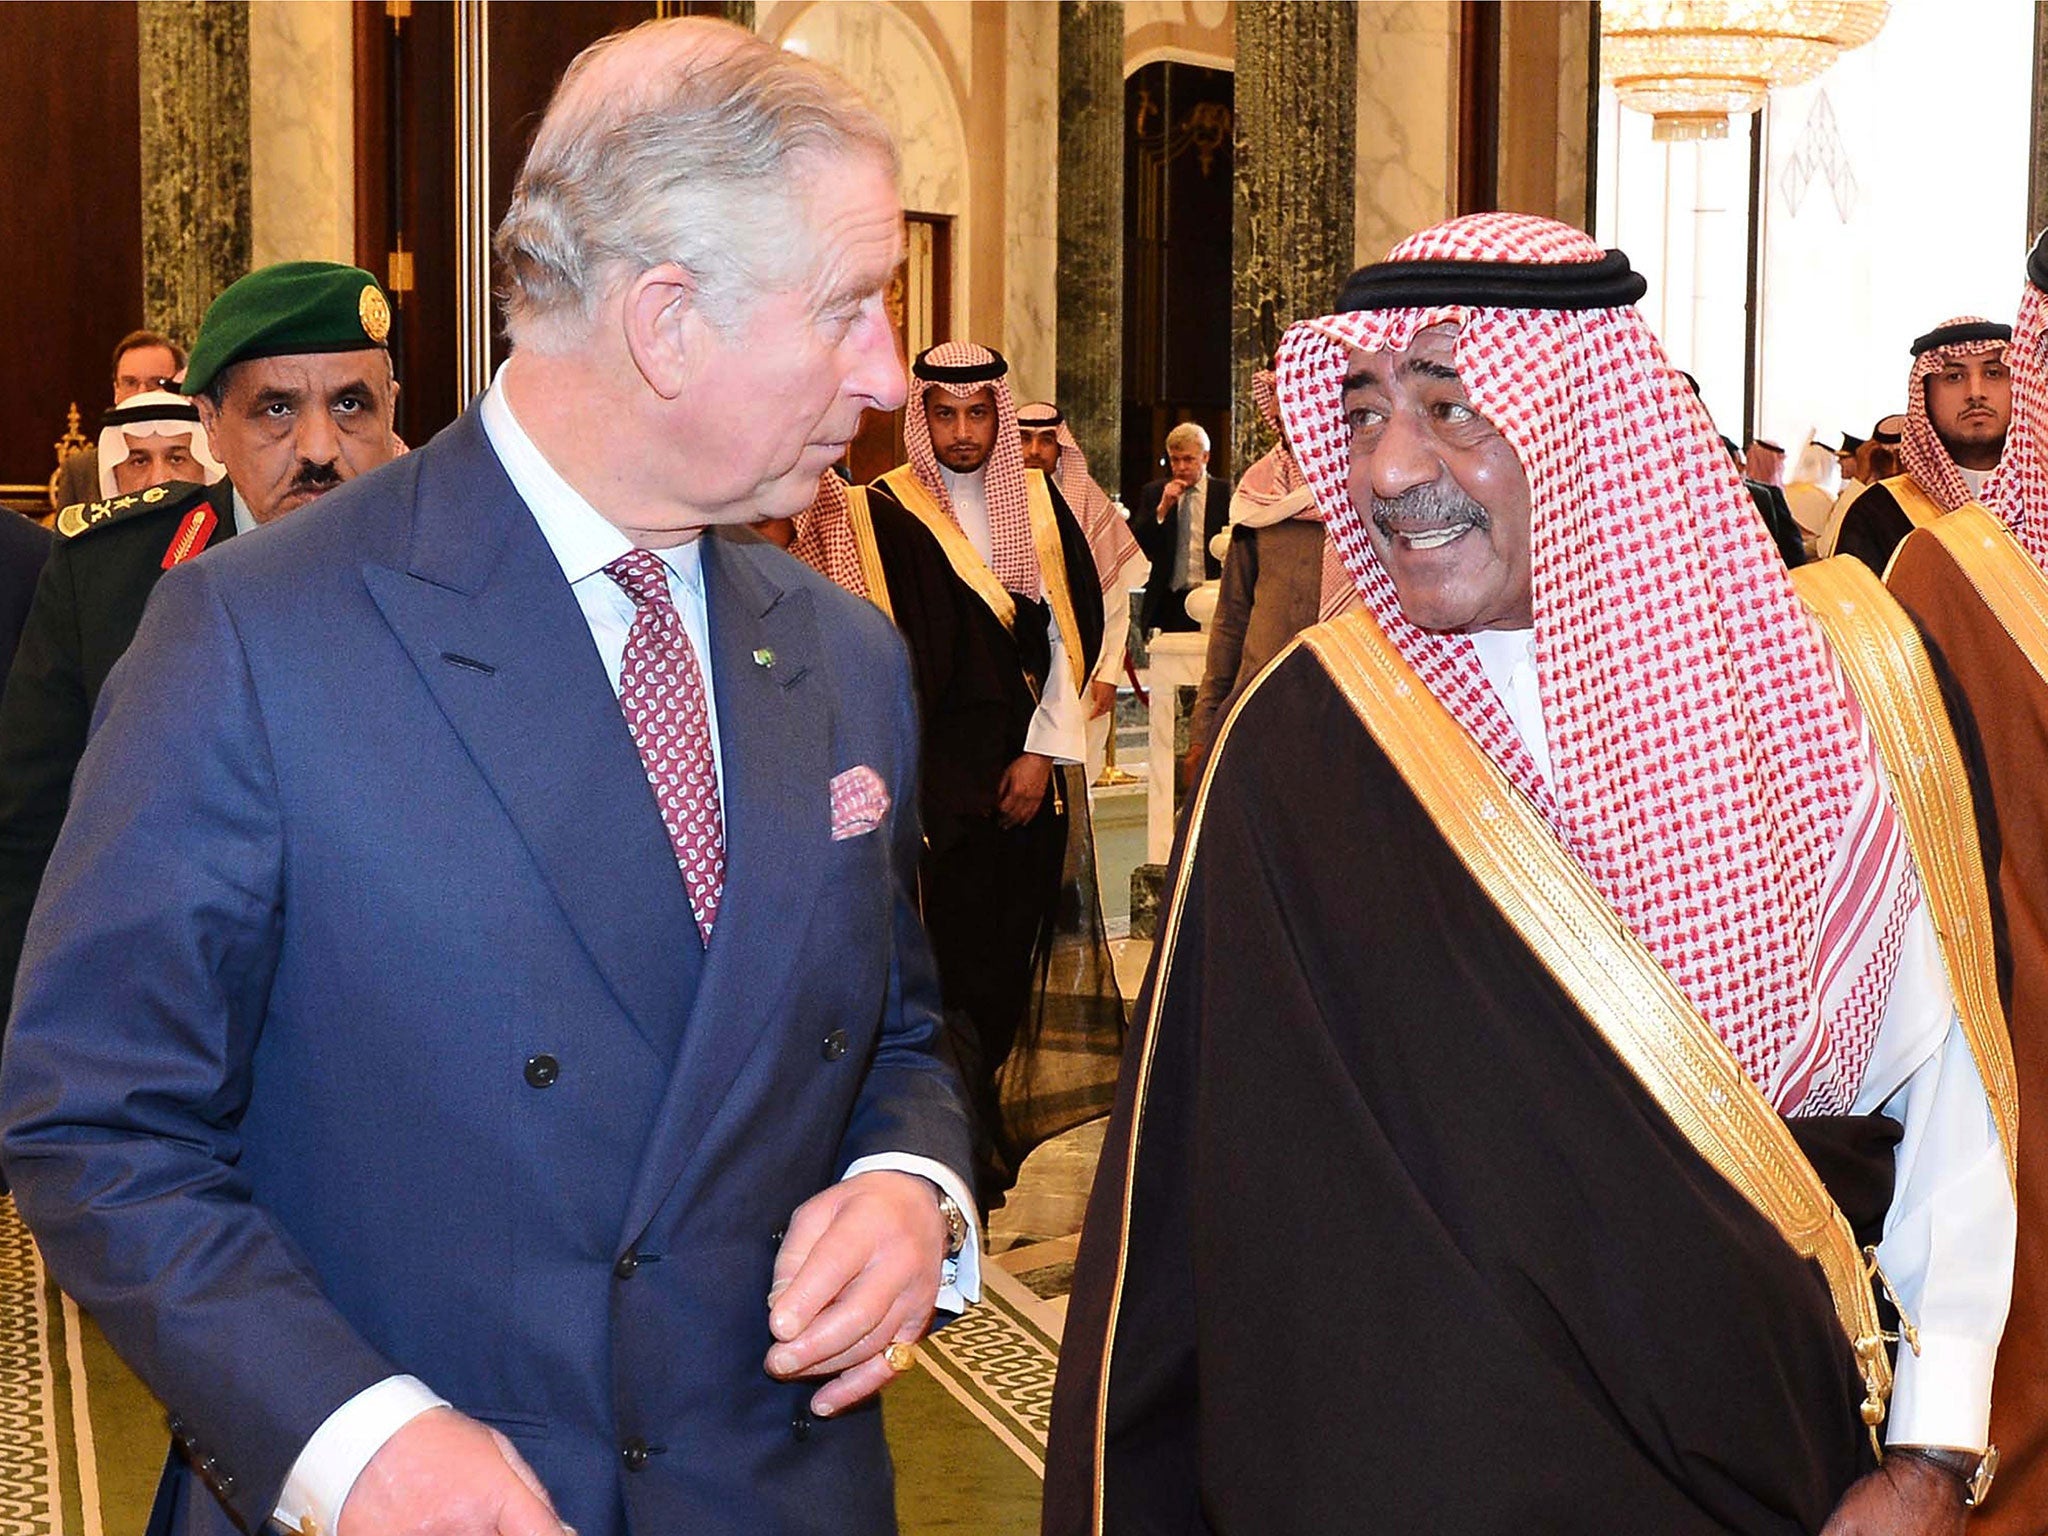 Prince Charles talks with the Saudi Crown Prince, Muqrin bin Abdulaziz al-Saud